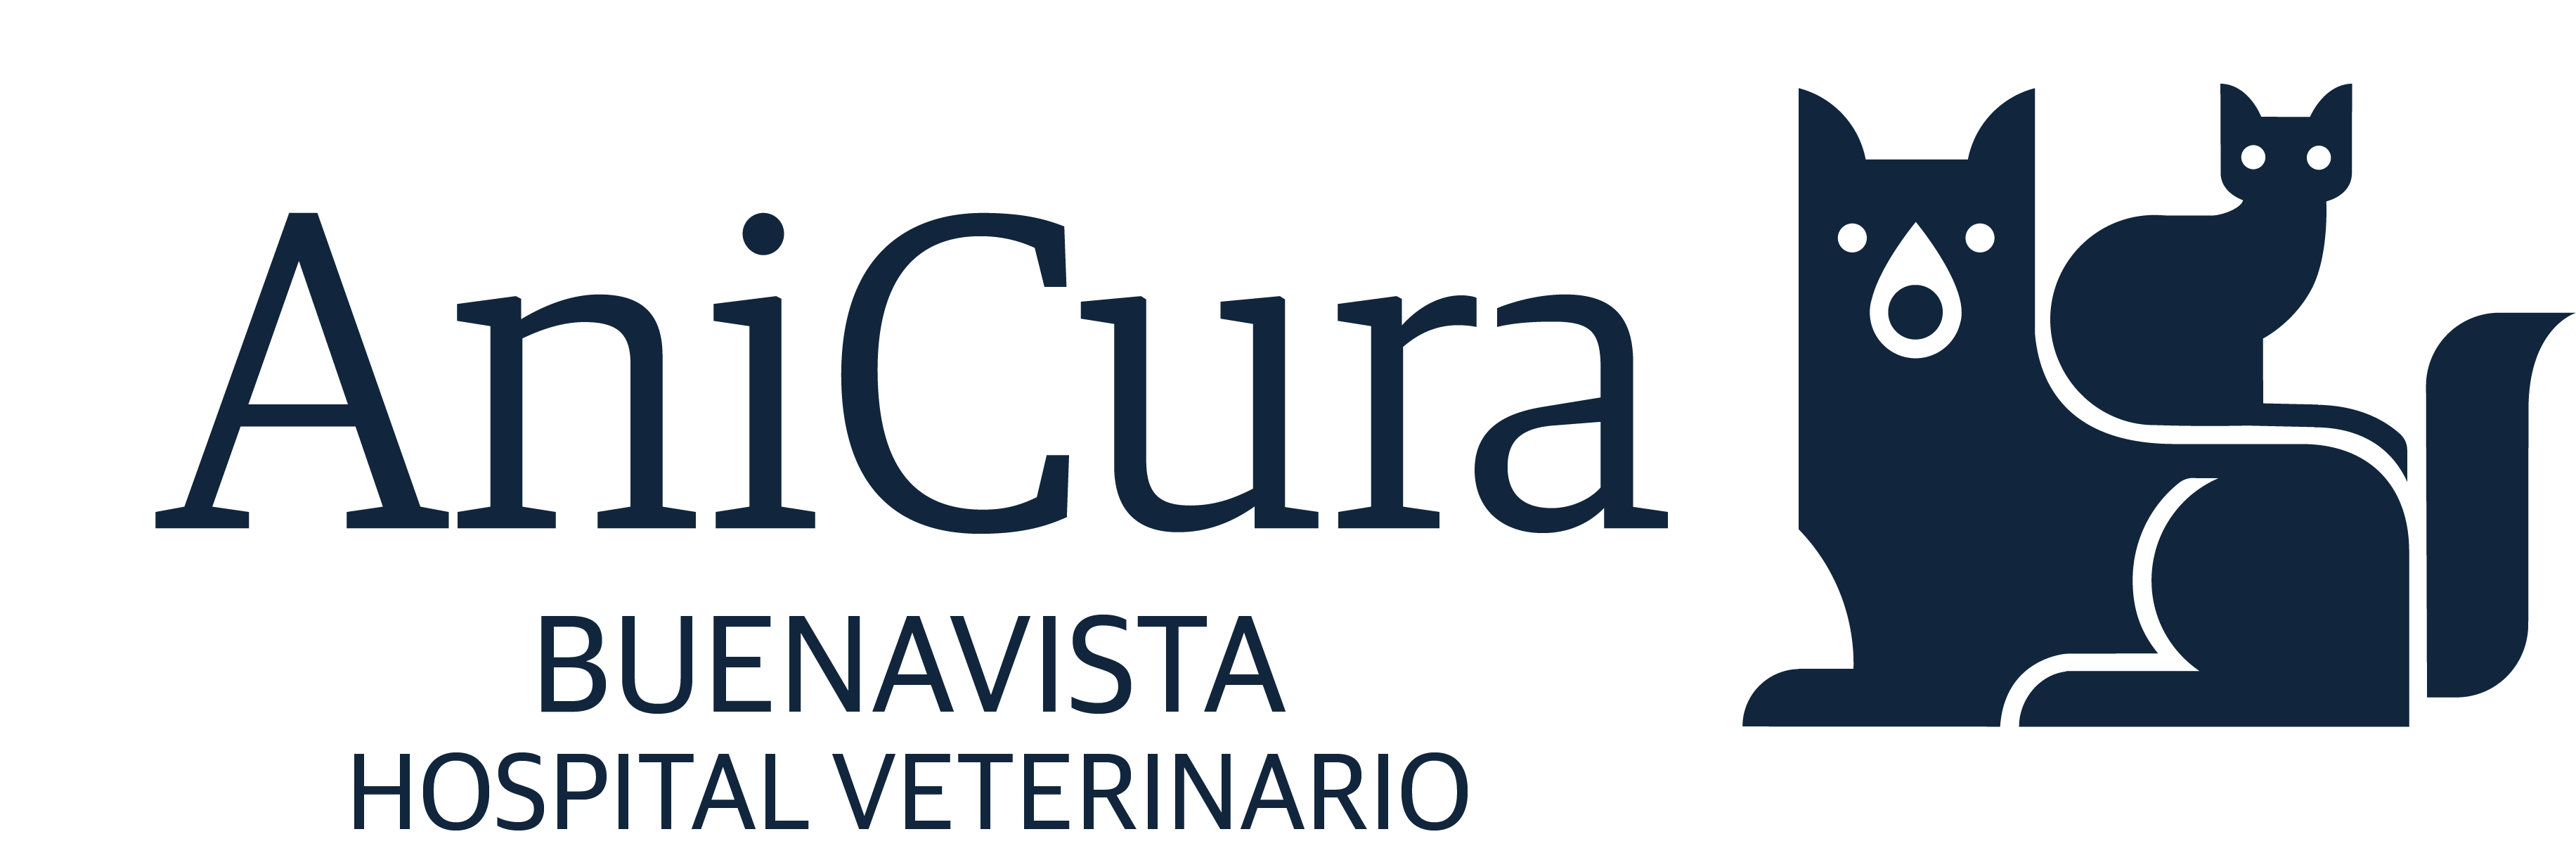 AniCura Buenavista Hospital Veterinario logo